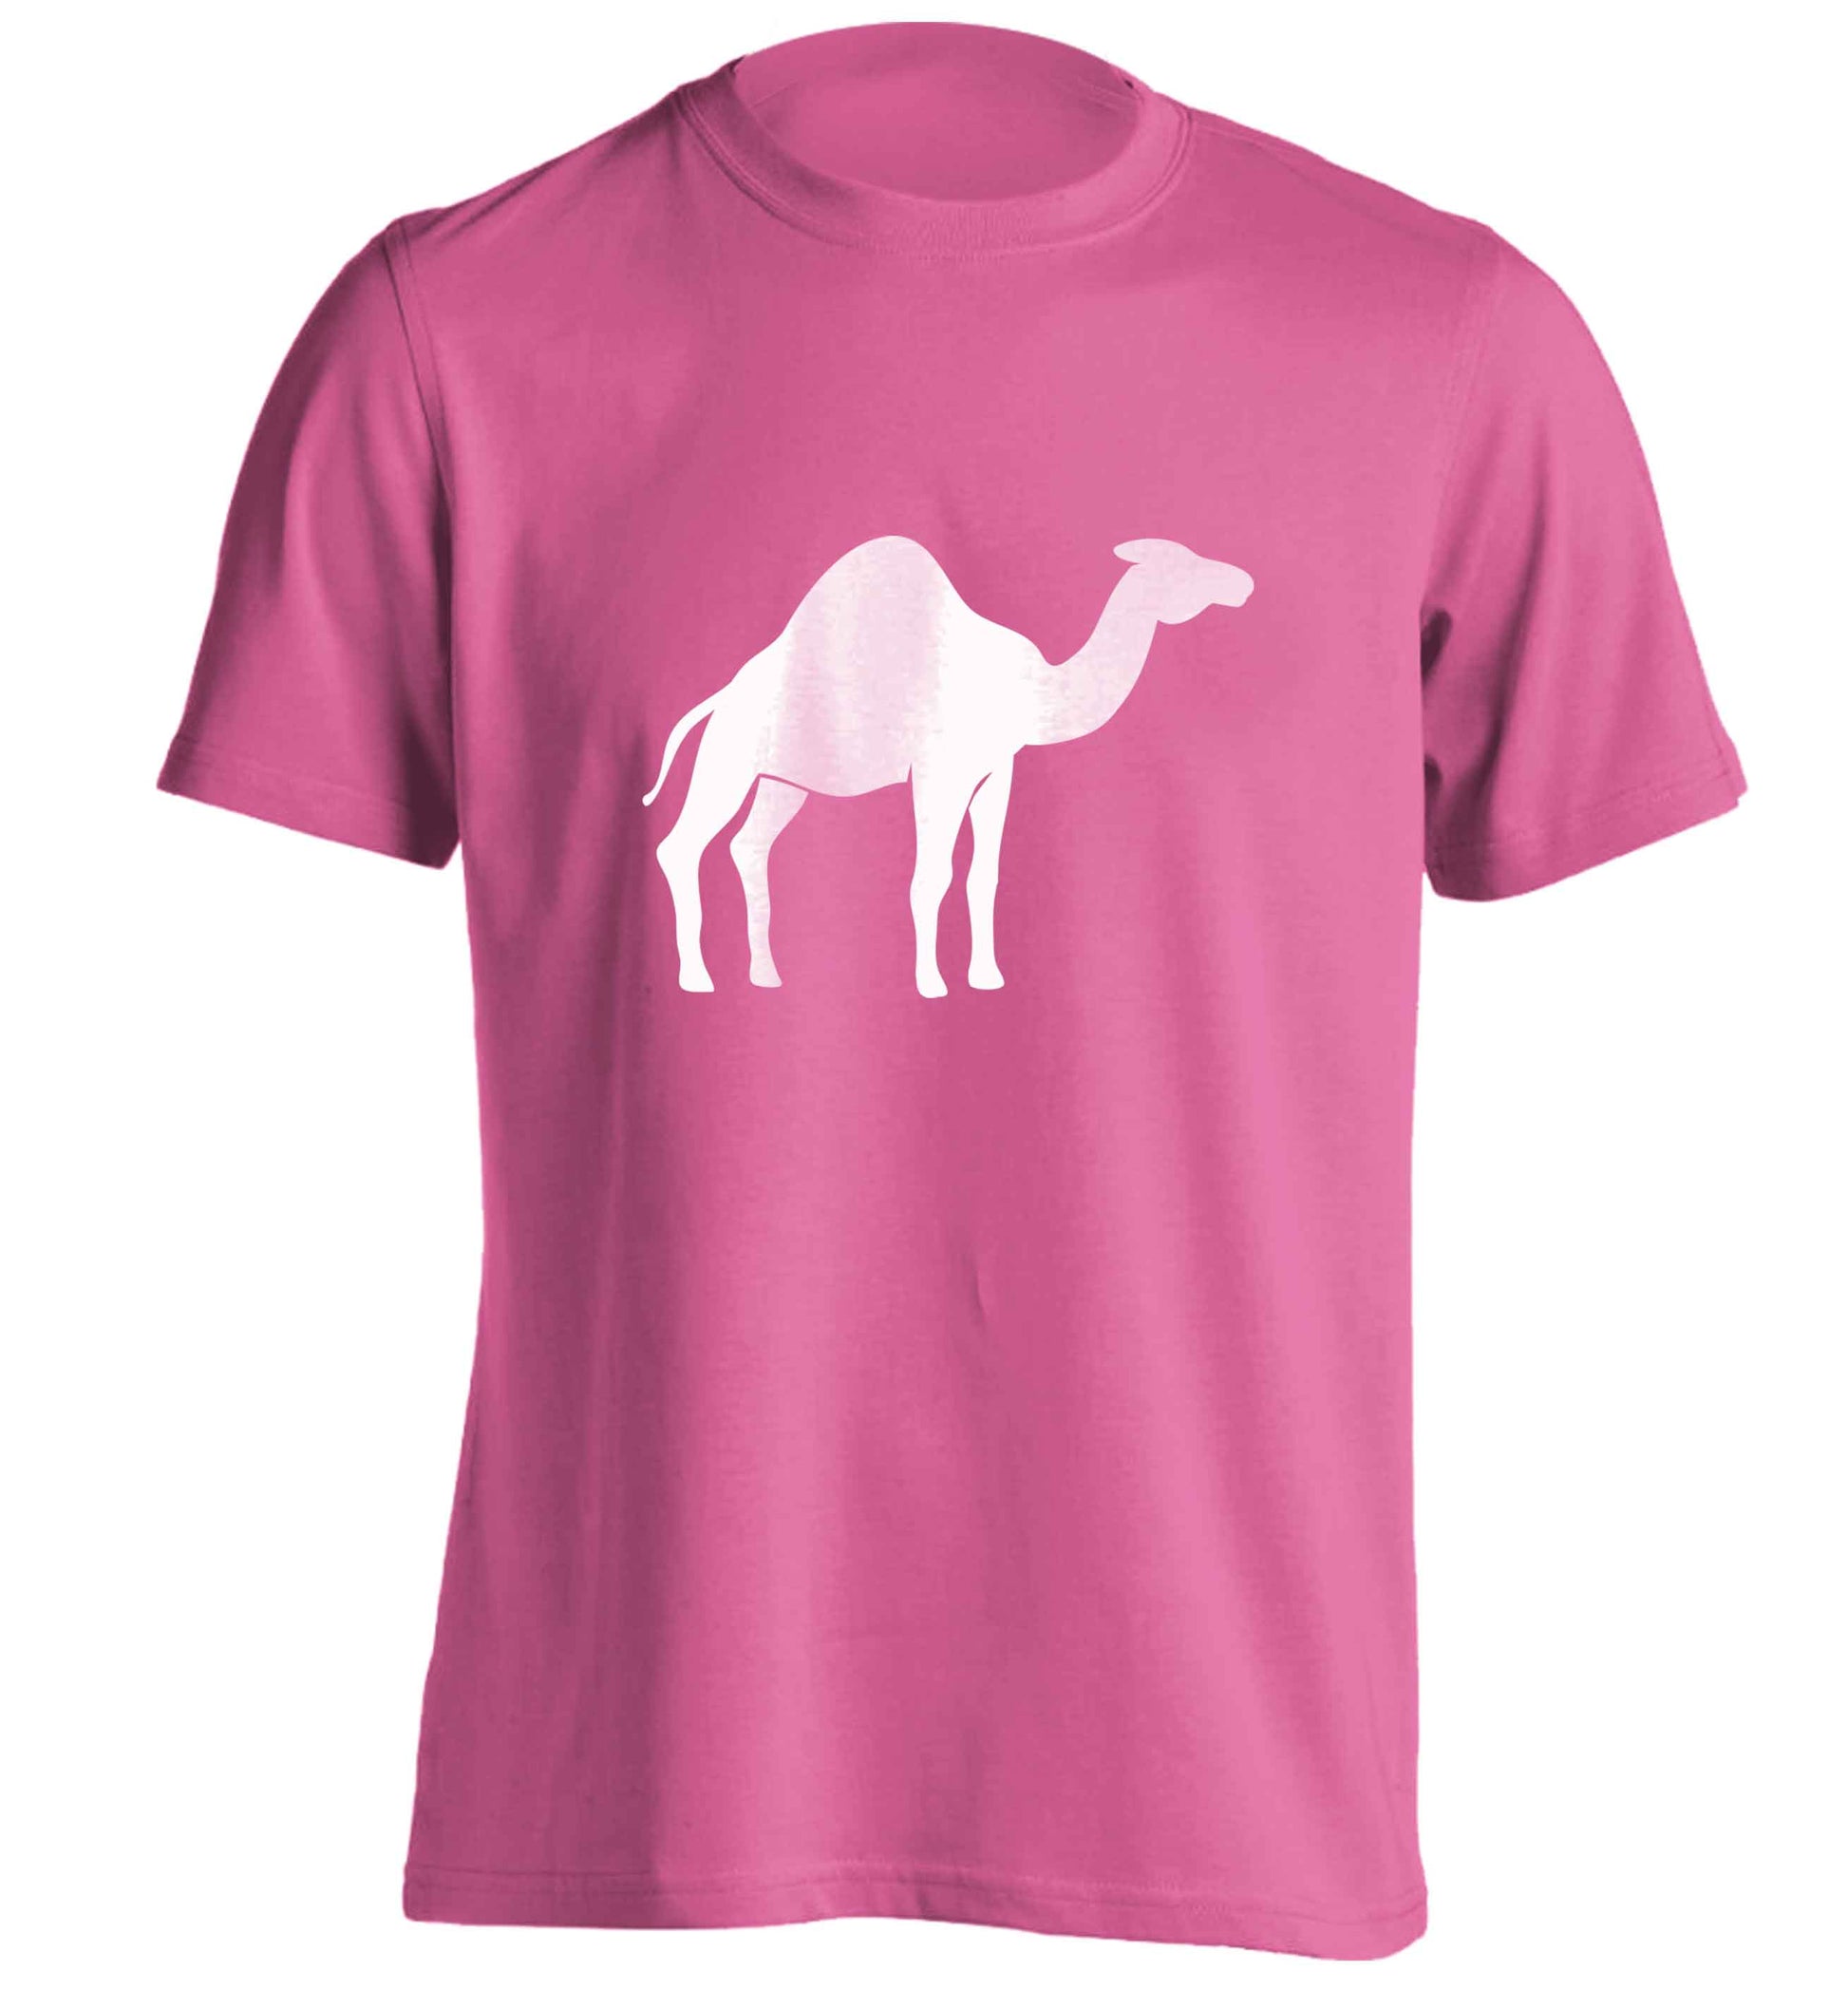 Blue camel adults unisex pink Tshirt 2XL